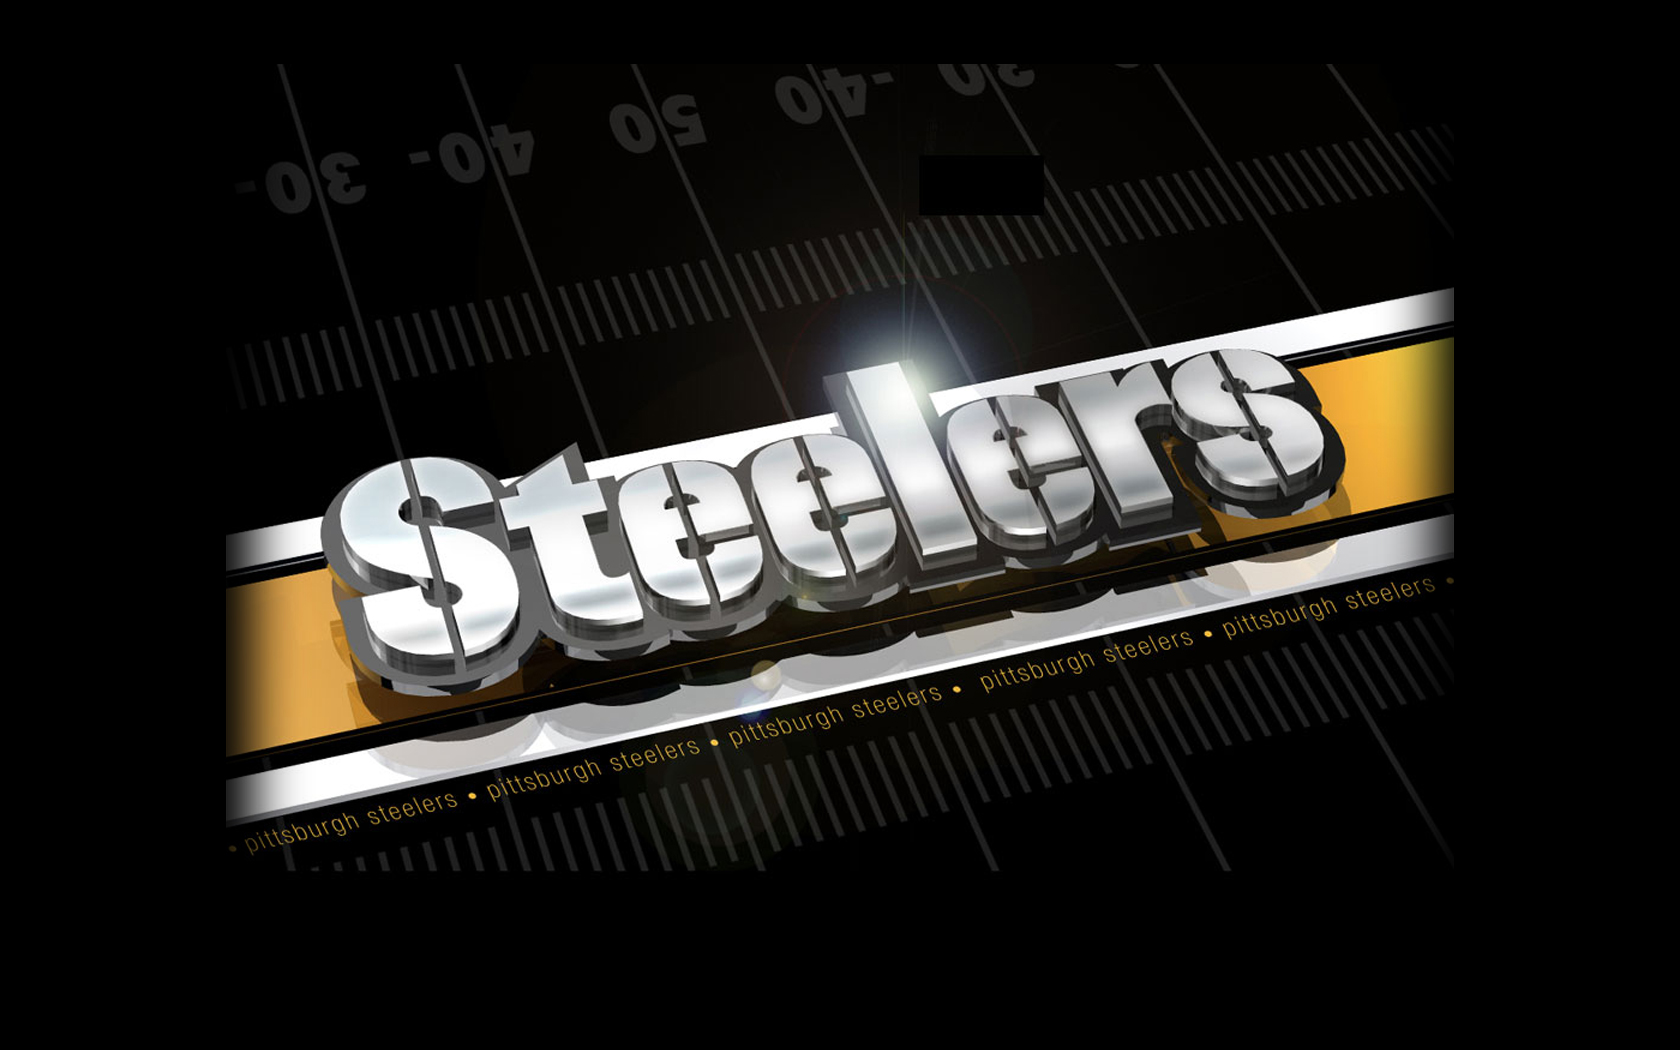 Pittsburgh Steelers Desktop Wallpaper